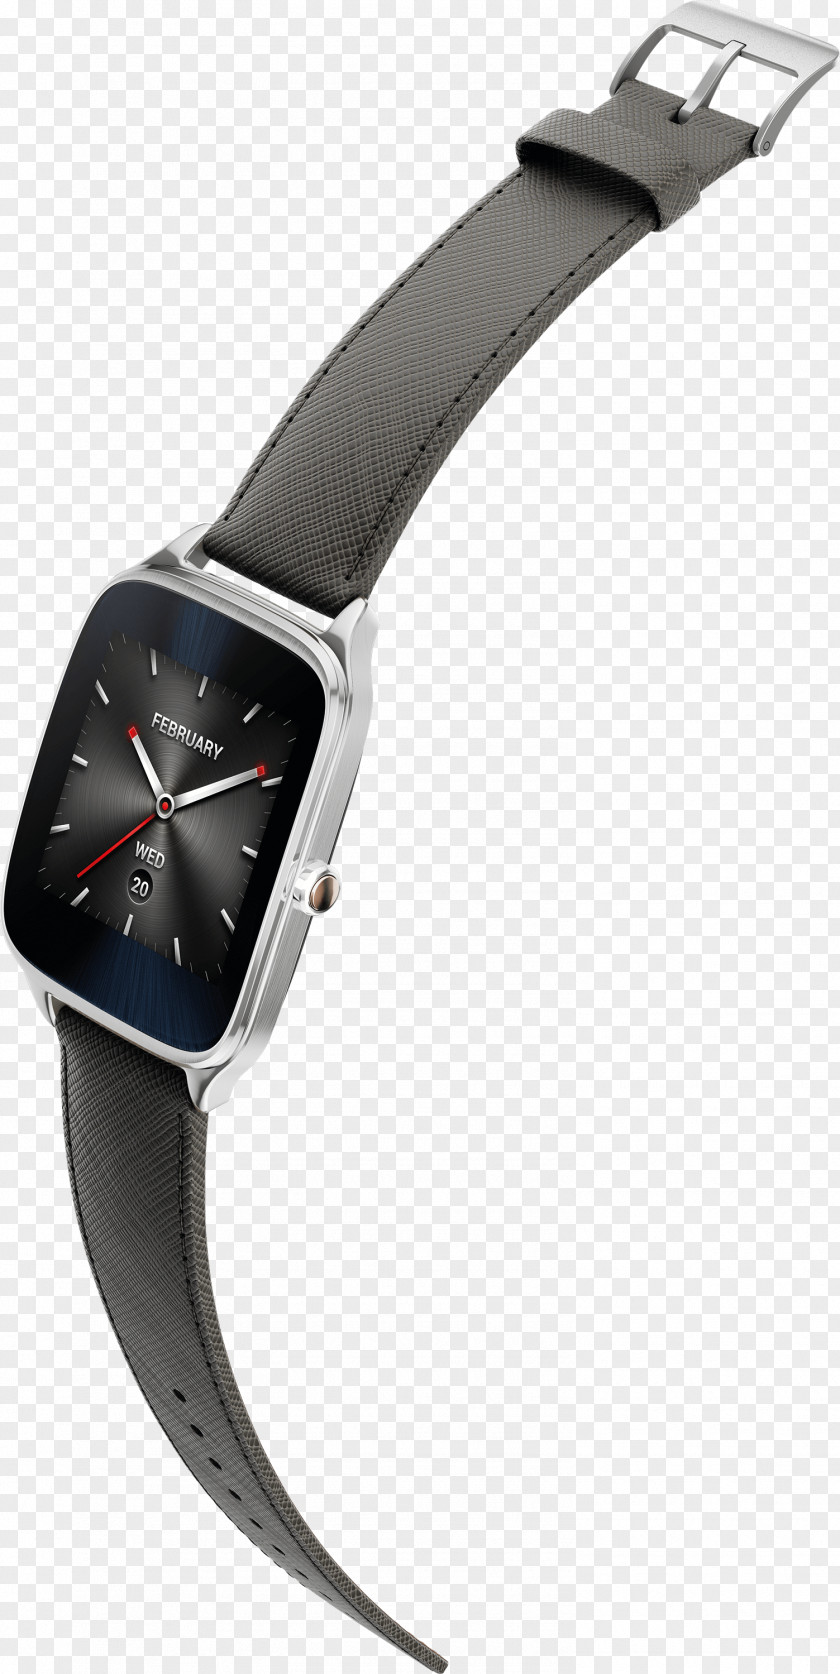 Watch ASUS ZenWatch 2 LG G Smartwatch PNG